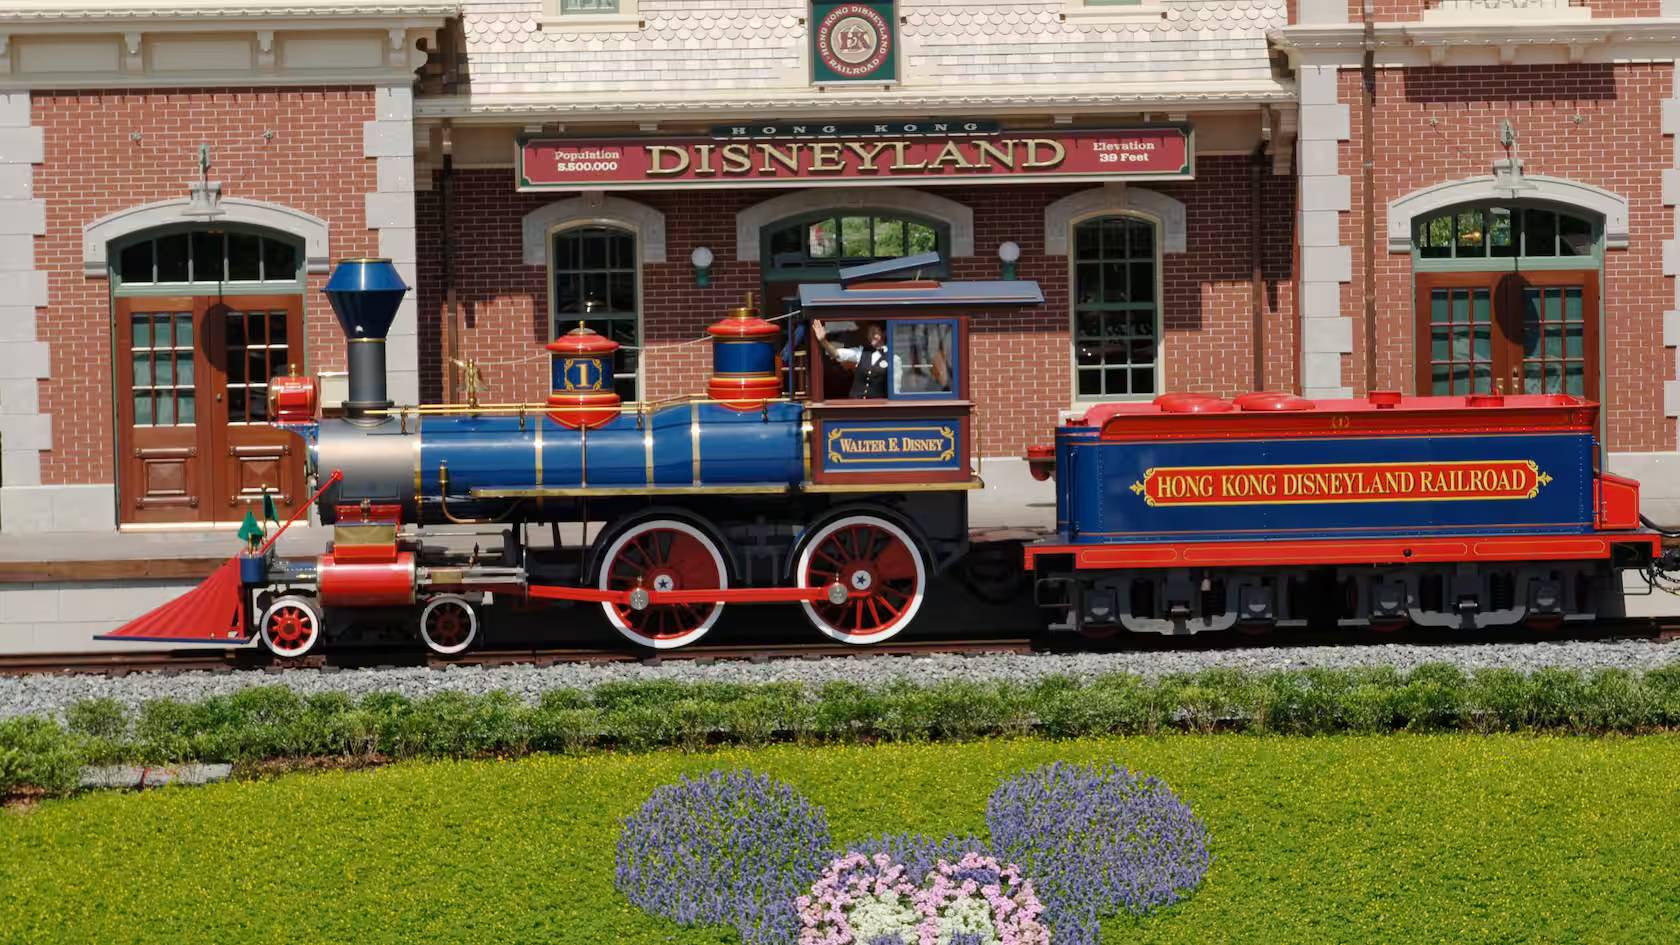 香港迪士尼乐园铁路－小镇大街火车站 / Hong Kong Disneyland Railroad - Main Street Station